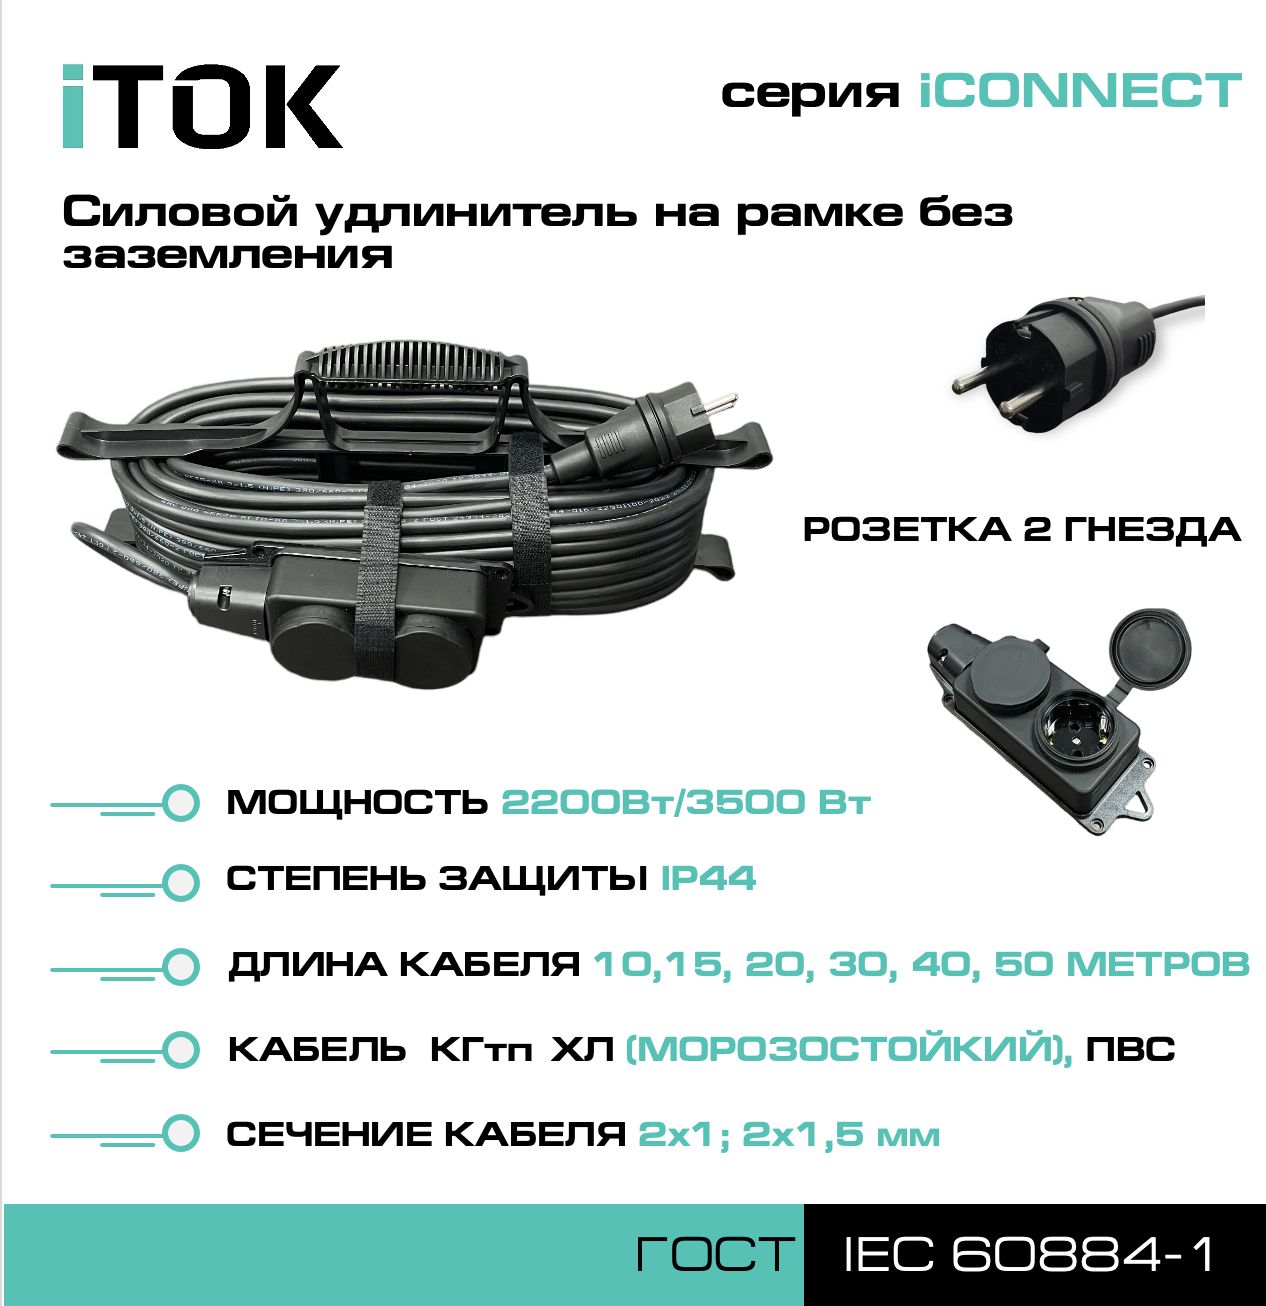 Удлинитель на рамке без земли серии iTOK iCONNECT КГтп-ХЛ 2х1,5 мм 2 гнезда IP44 30 м